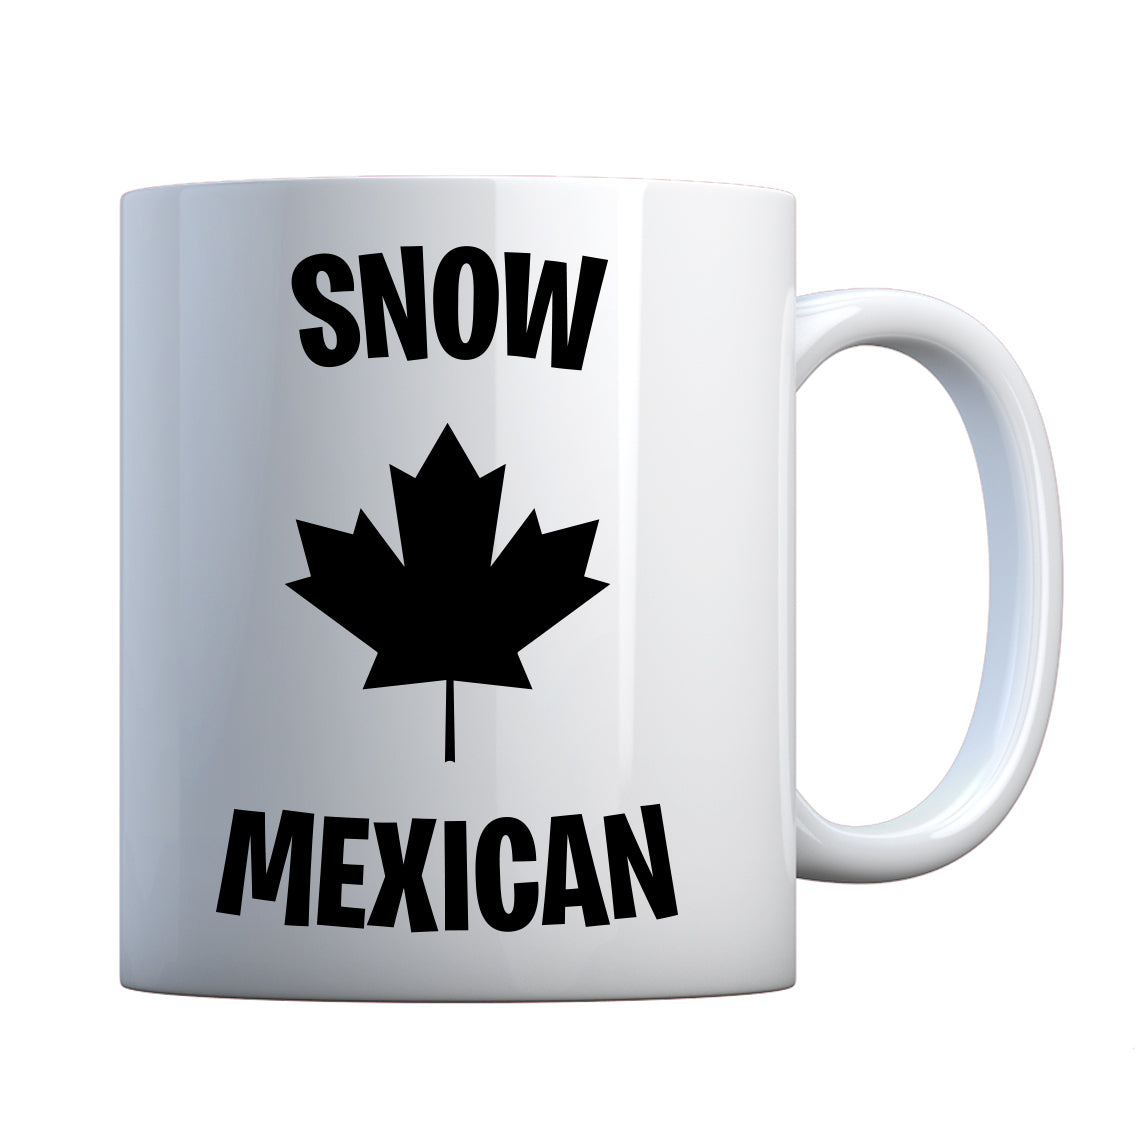 Snow Mexican Ceramic Gift Mug